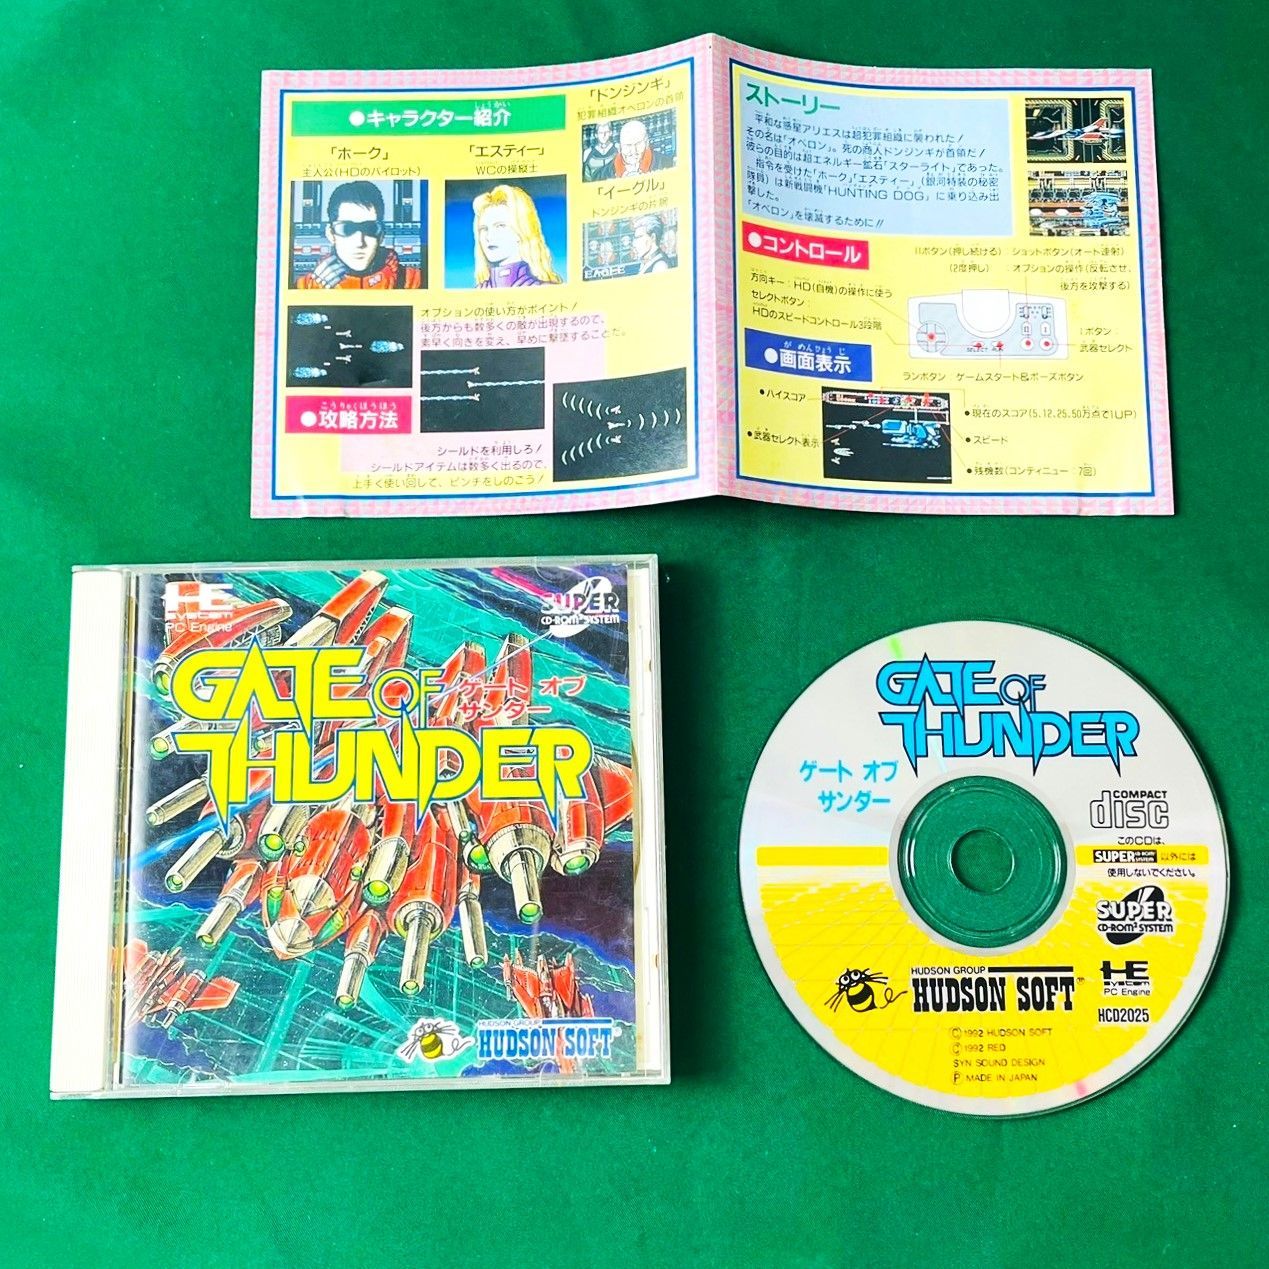 ◇ PC エンジン ゲート オブ サンダー SUPER CD ROM ソフト GATE OF